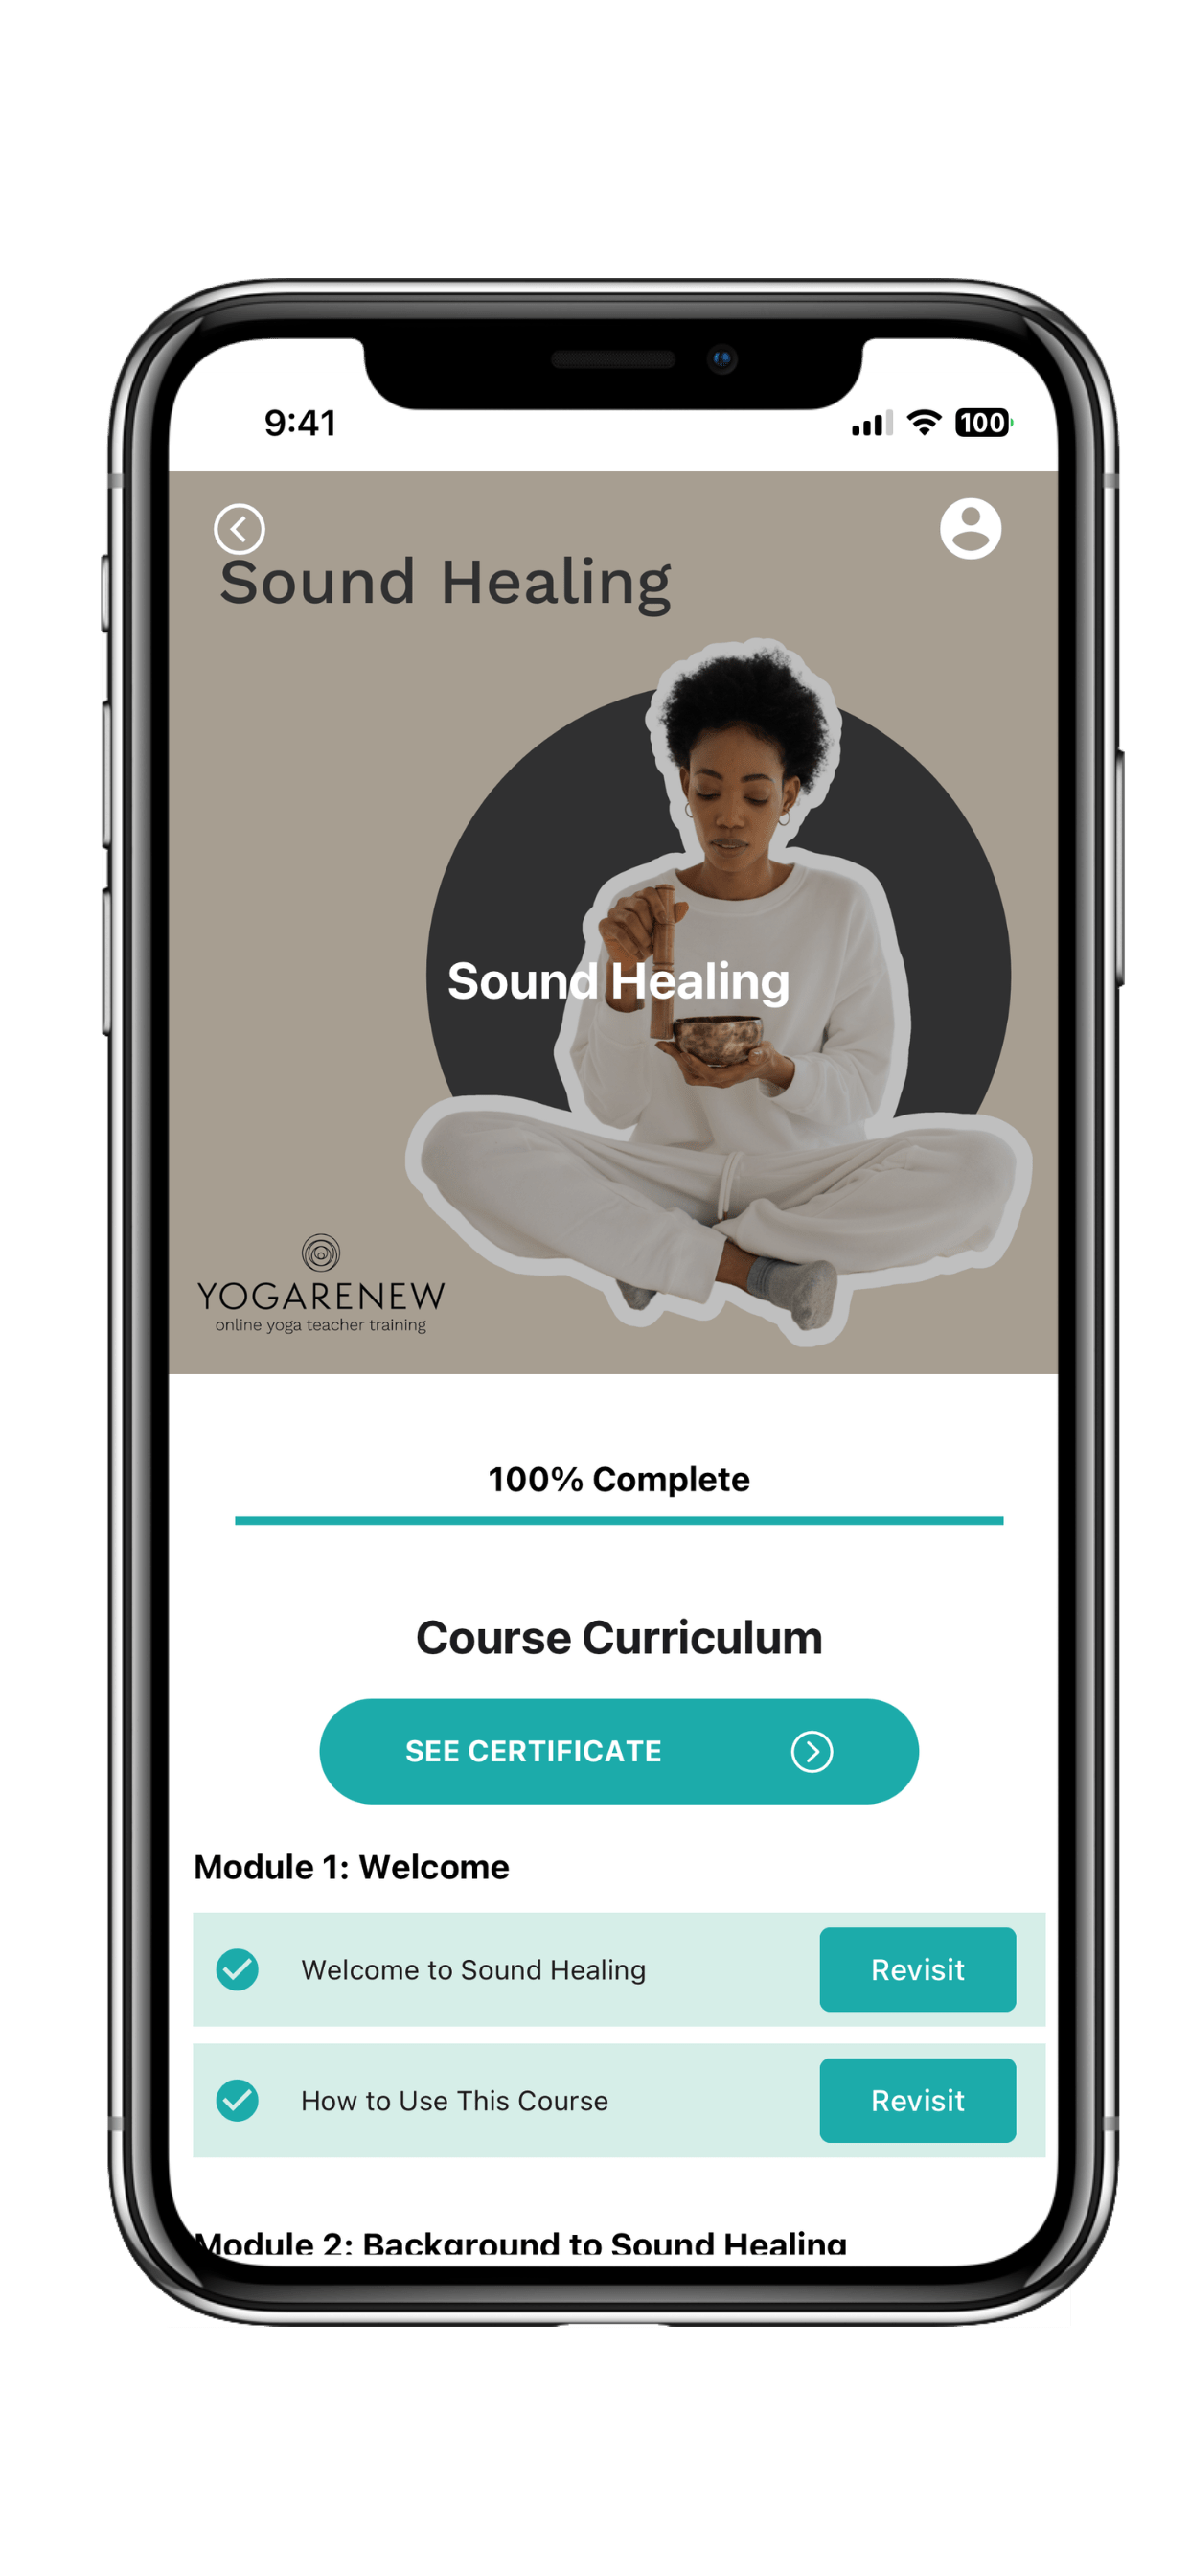 online yoga courses